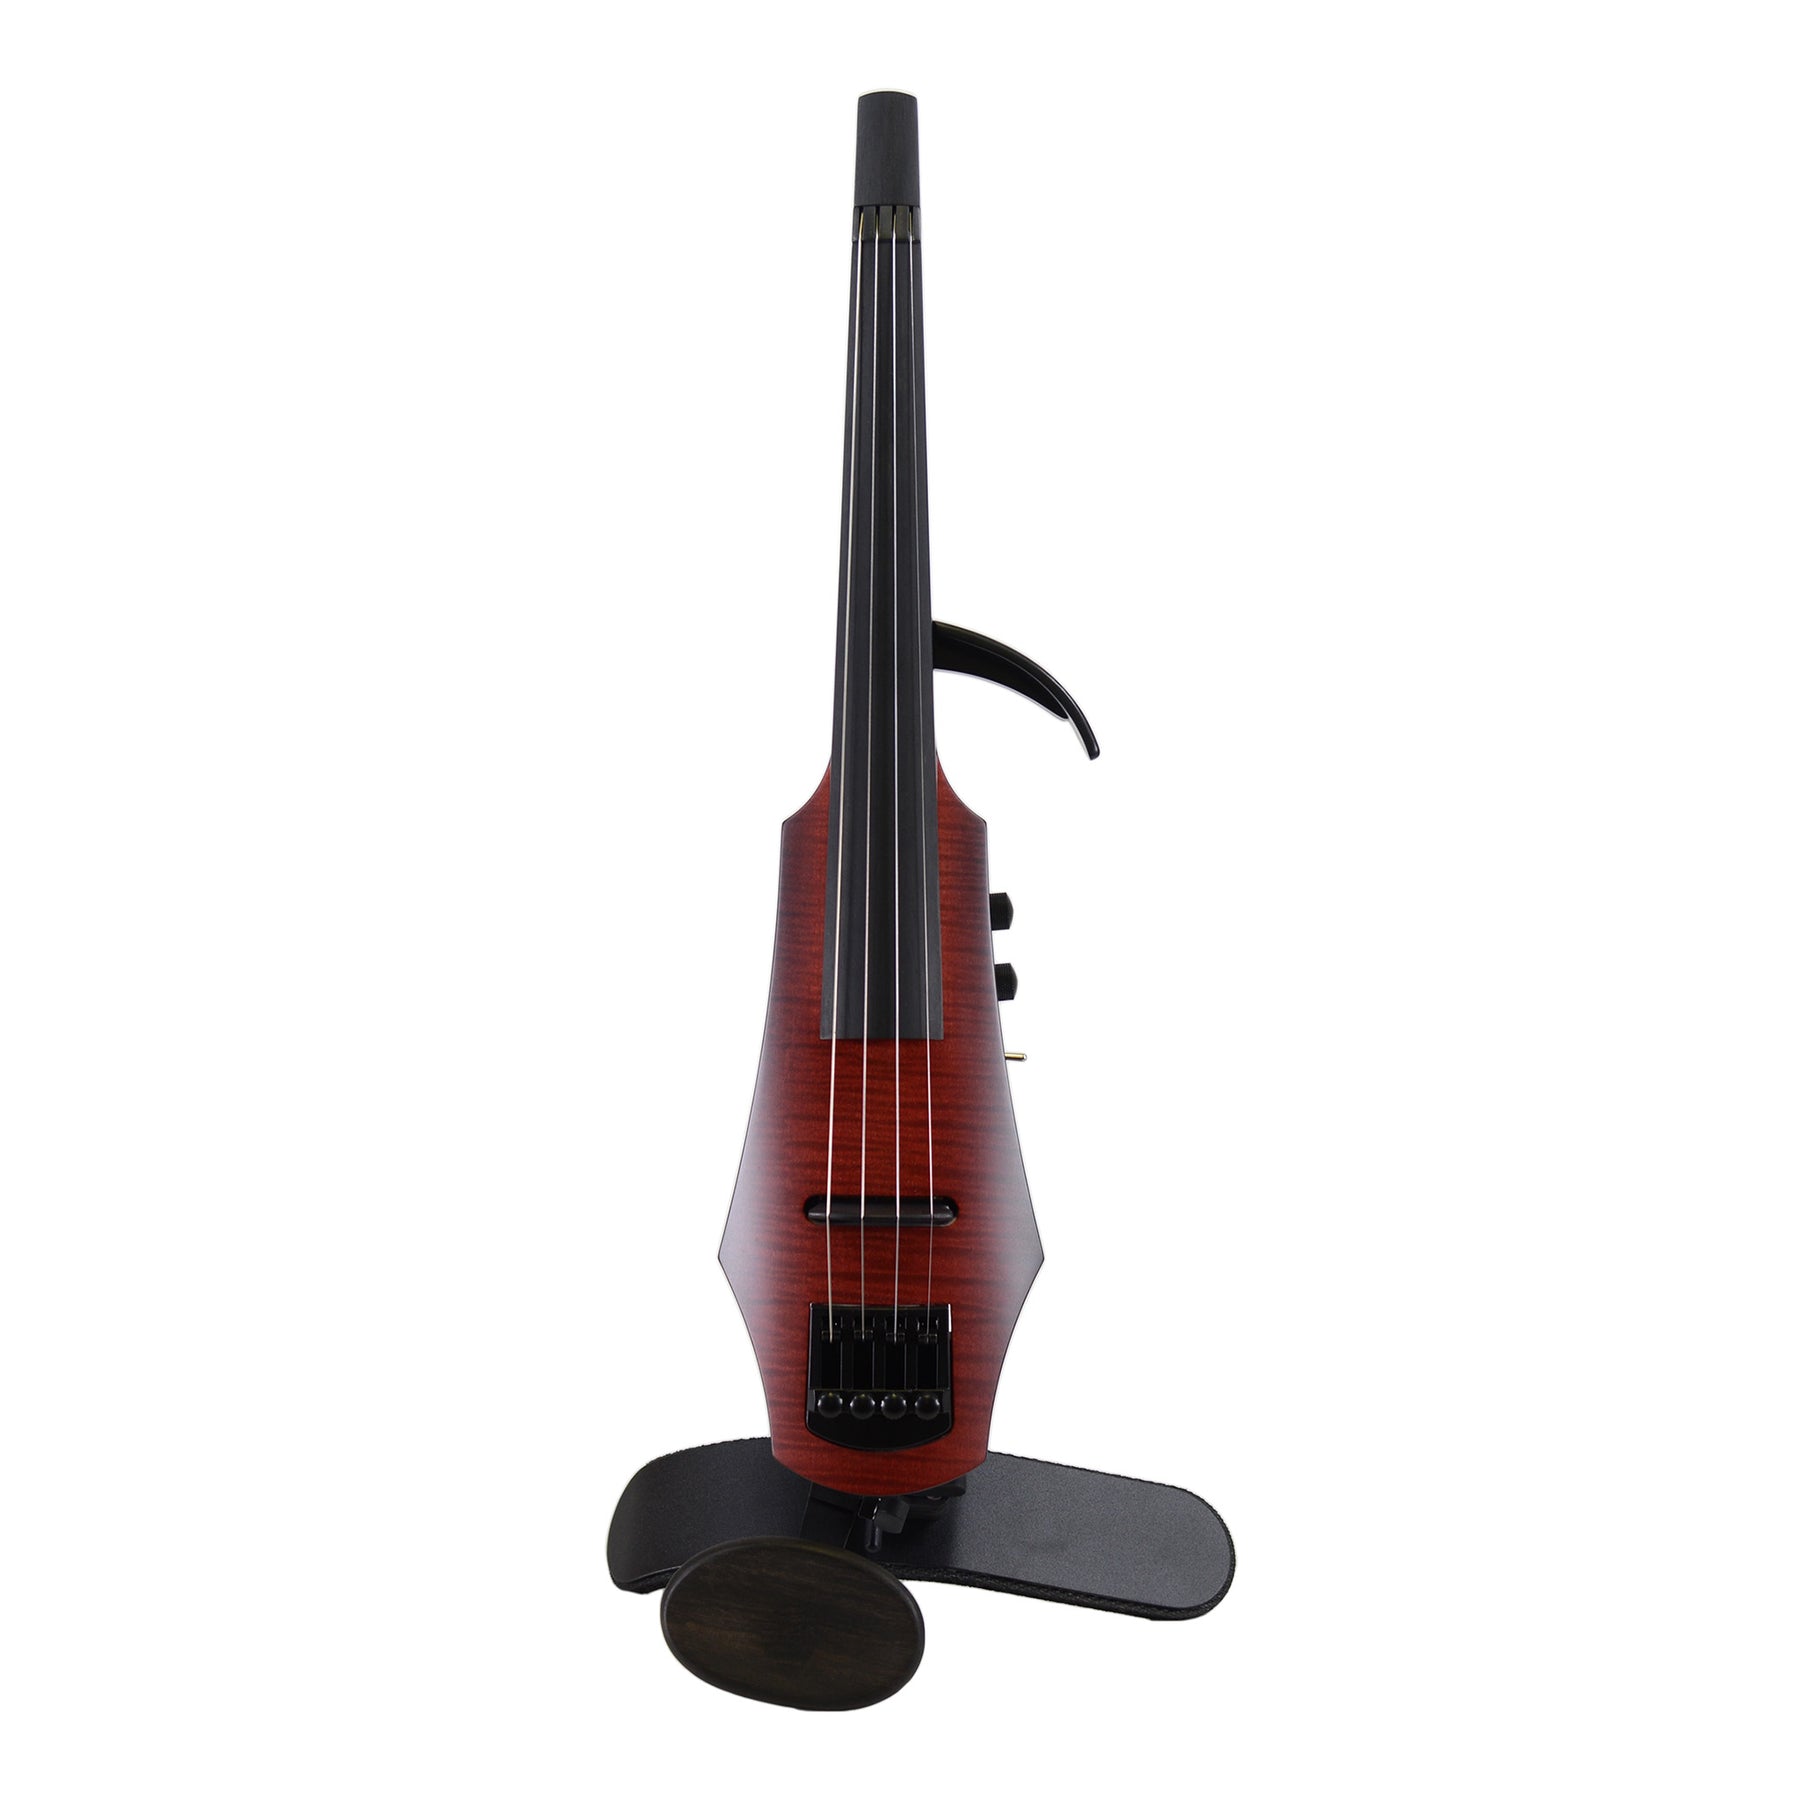 NS Design NXTa 4-string Electric Violin